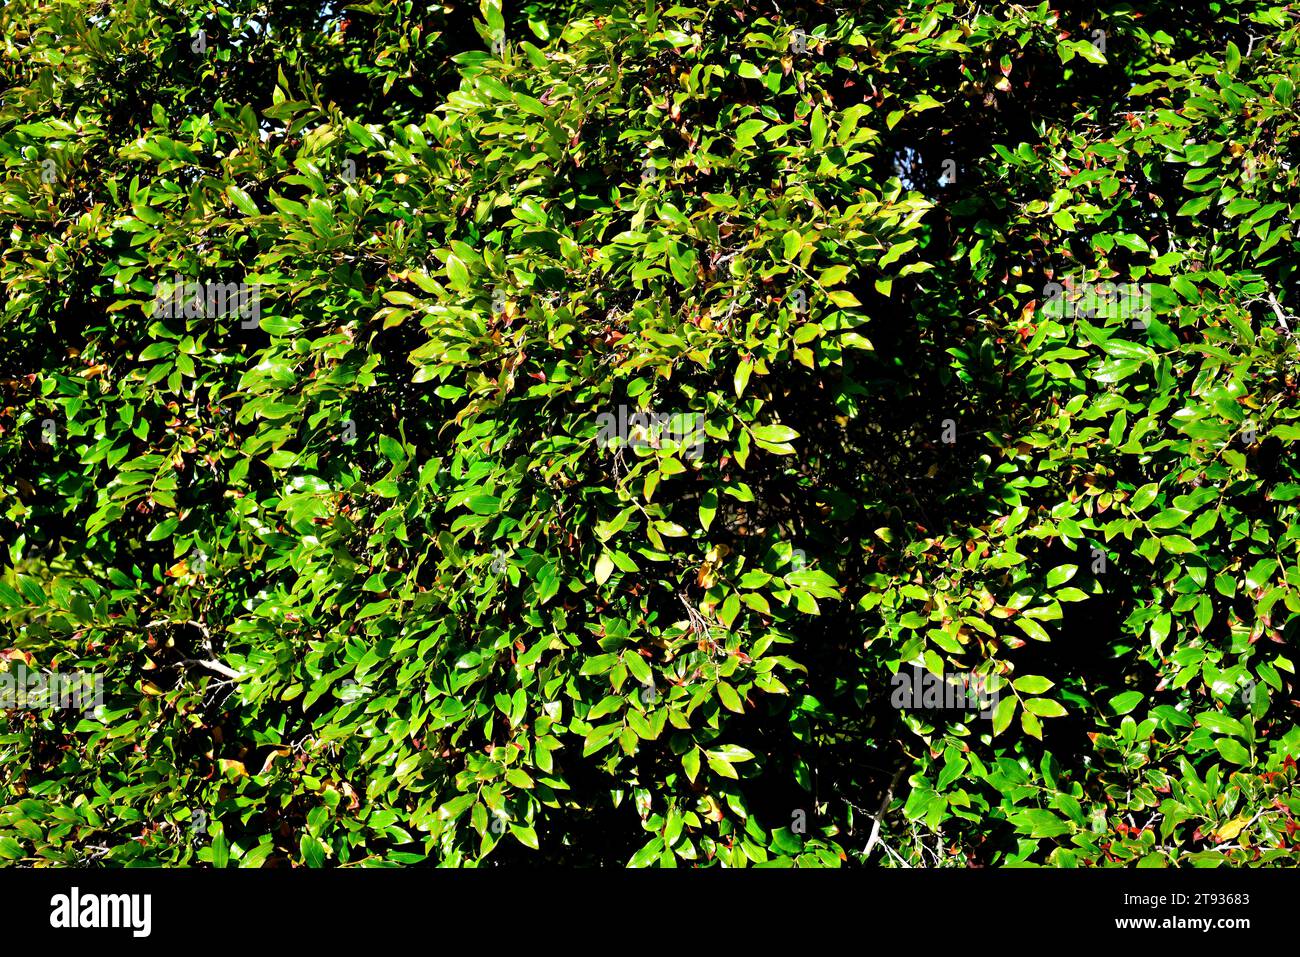 Bladdernut (Diospyros whyteana) is a small ornamental tree native to Africa. Stock Photo